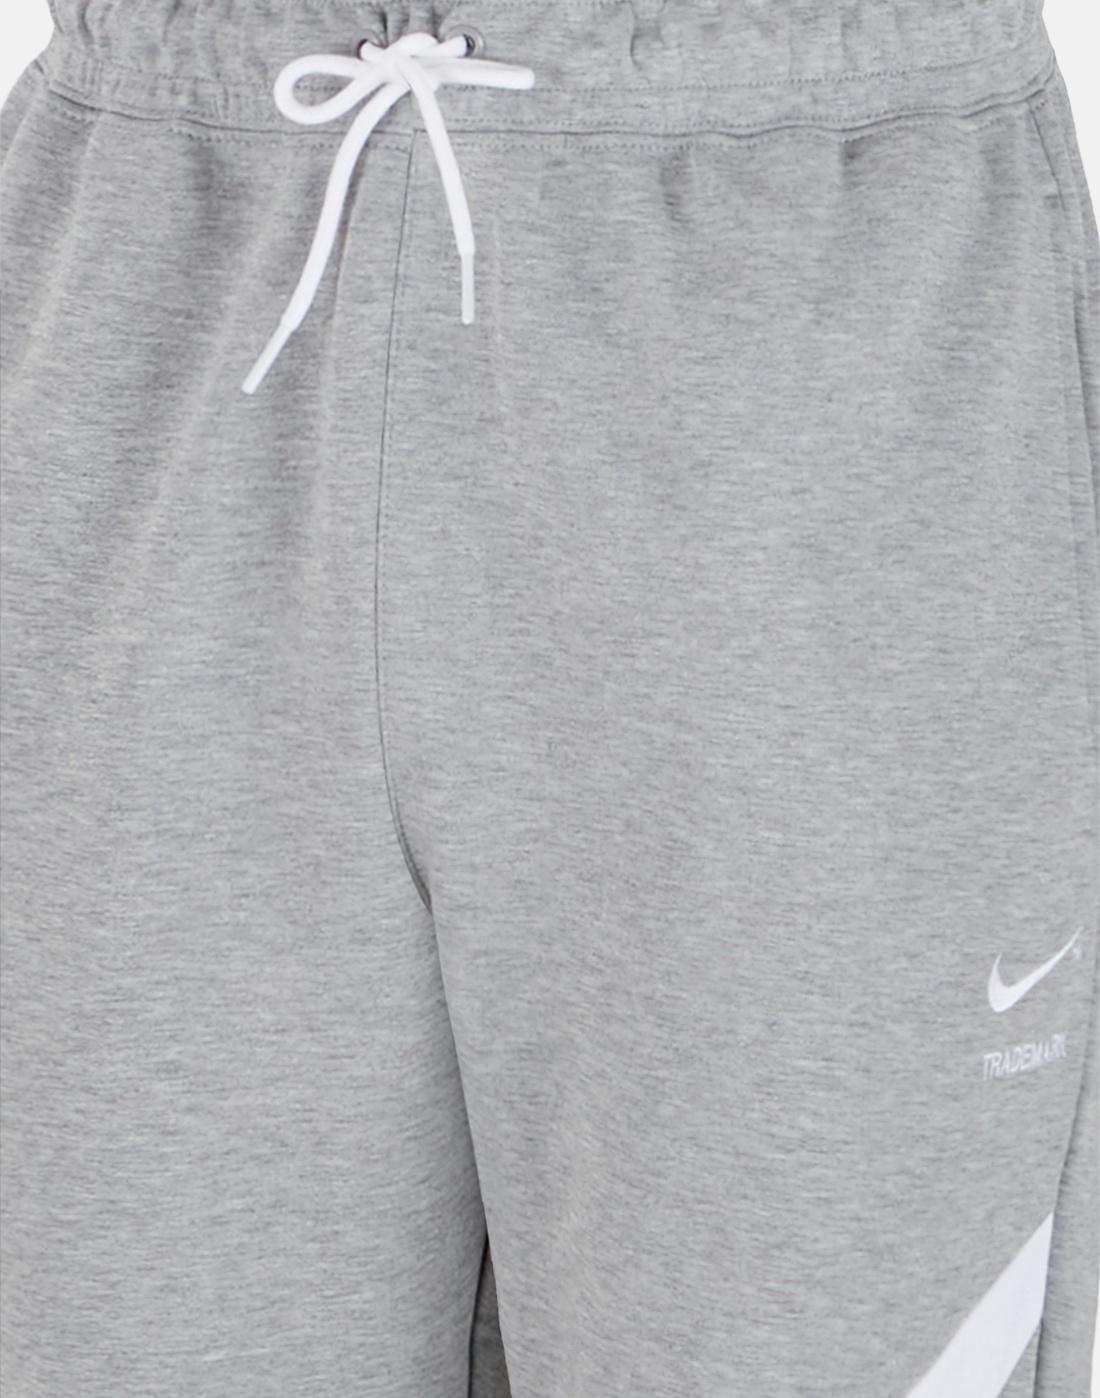 Nike Mens Swoosh Tech Fleece pants